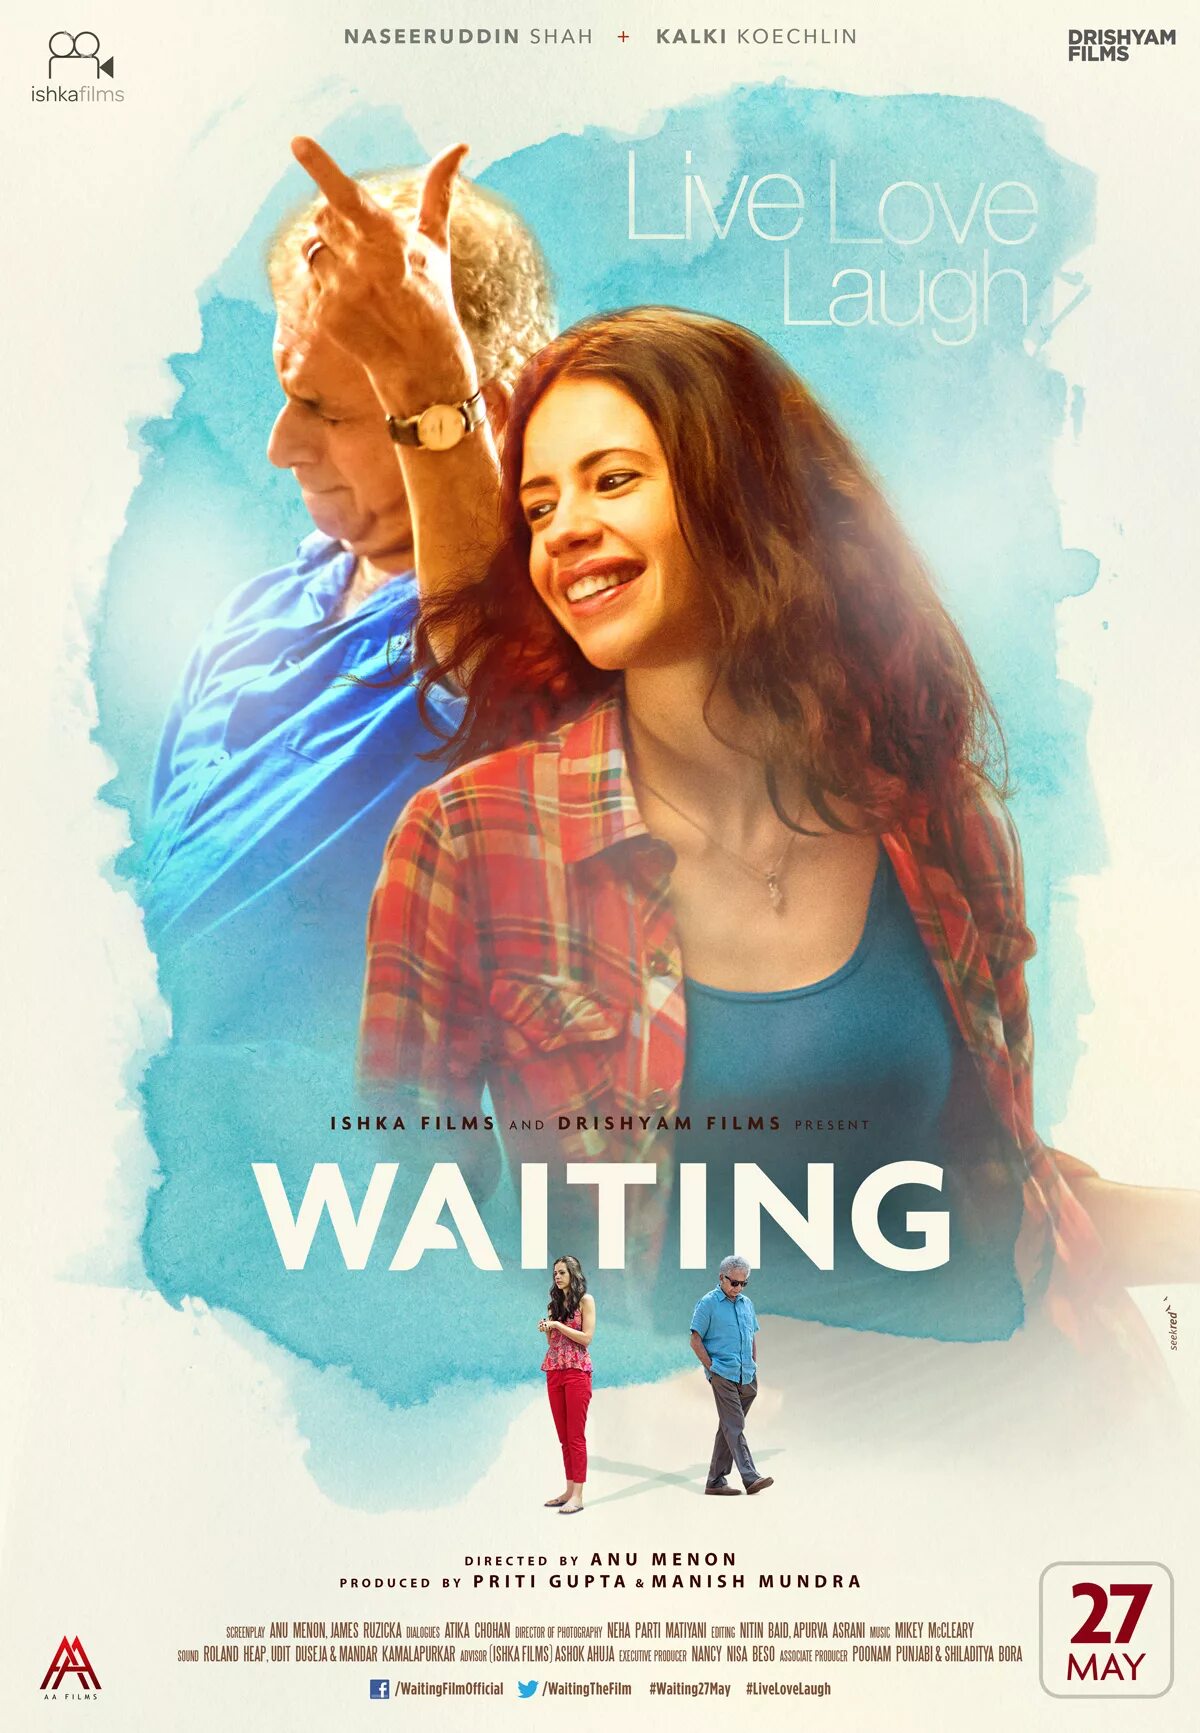 Waiting films